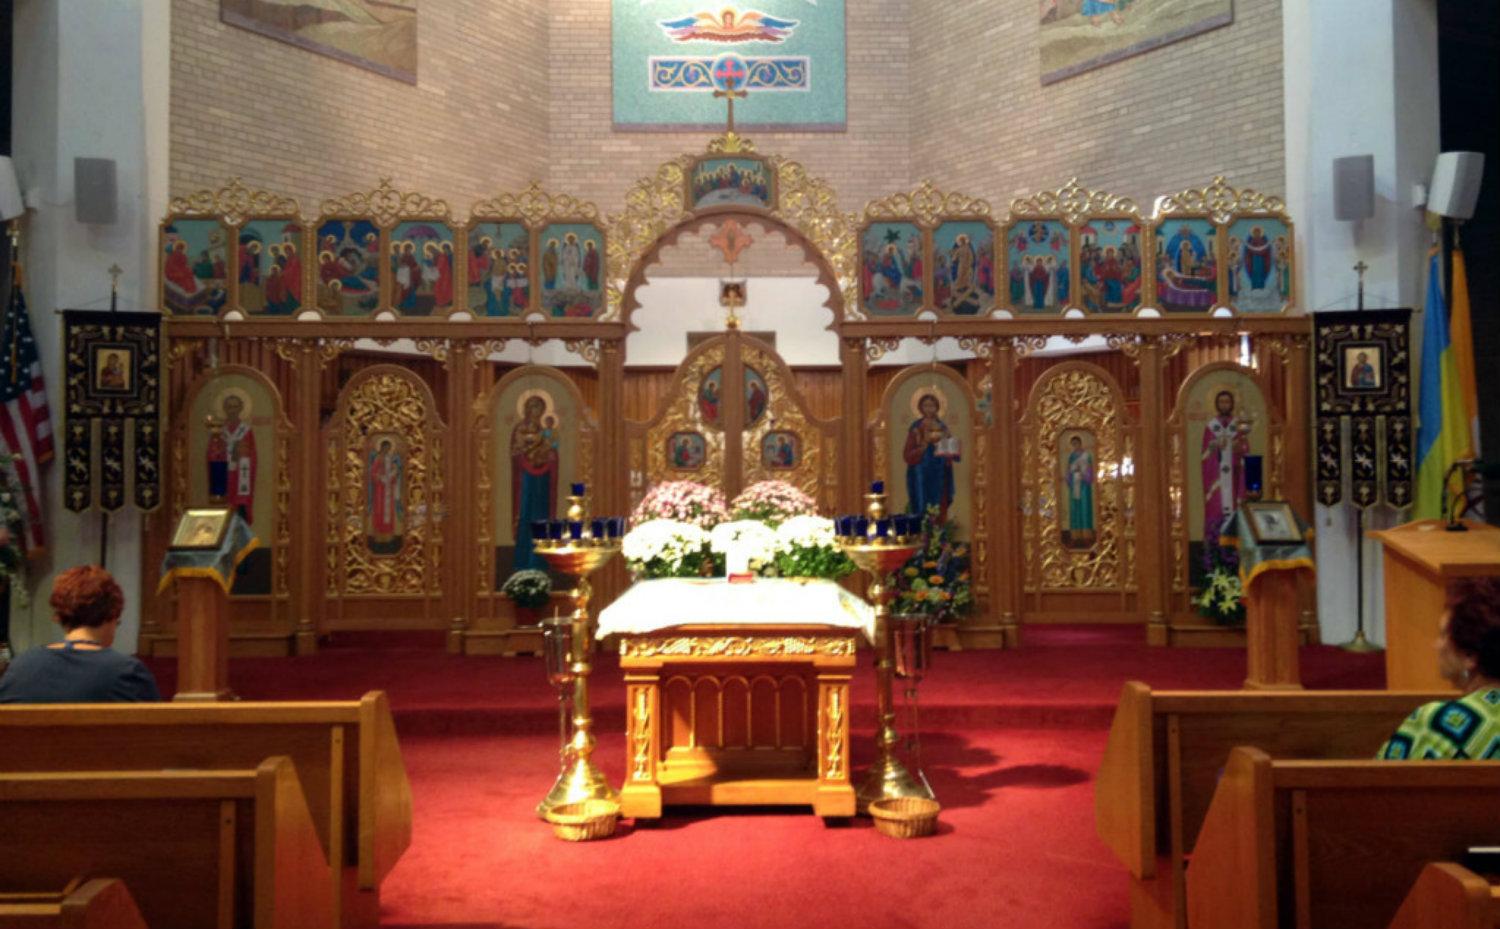 St. Josaphat's Ukrainian Catholic Church in Rochester, NY - Featured Image